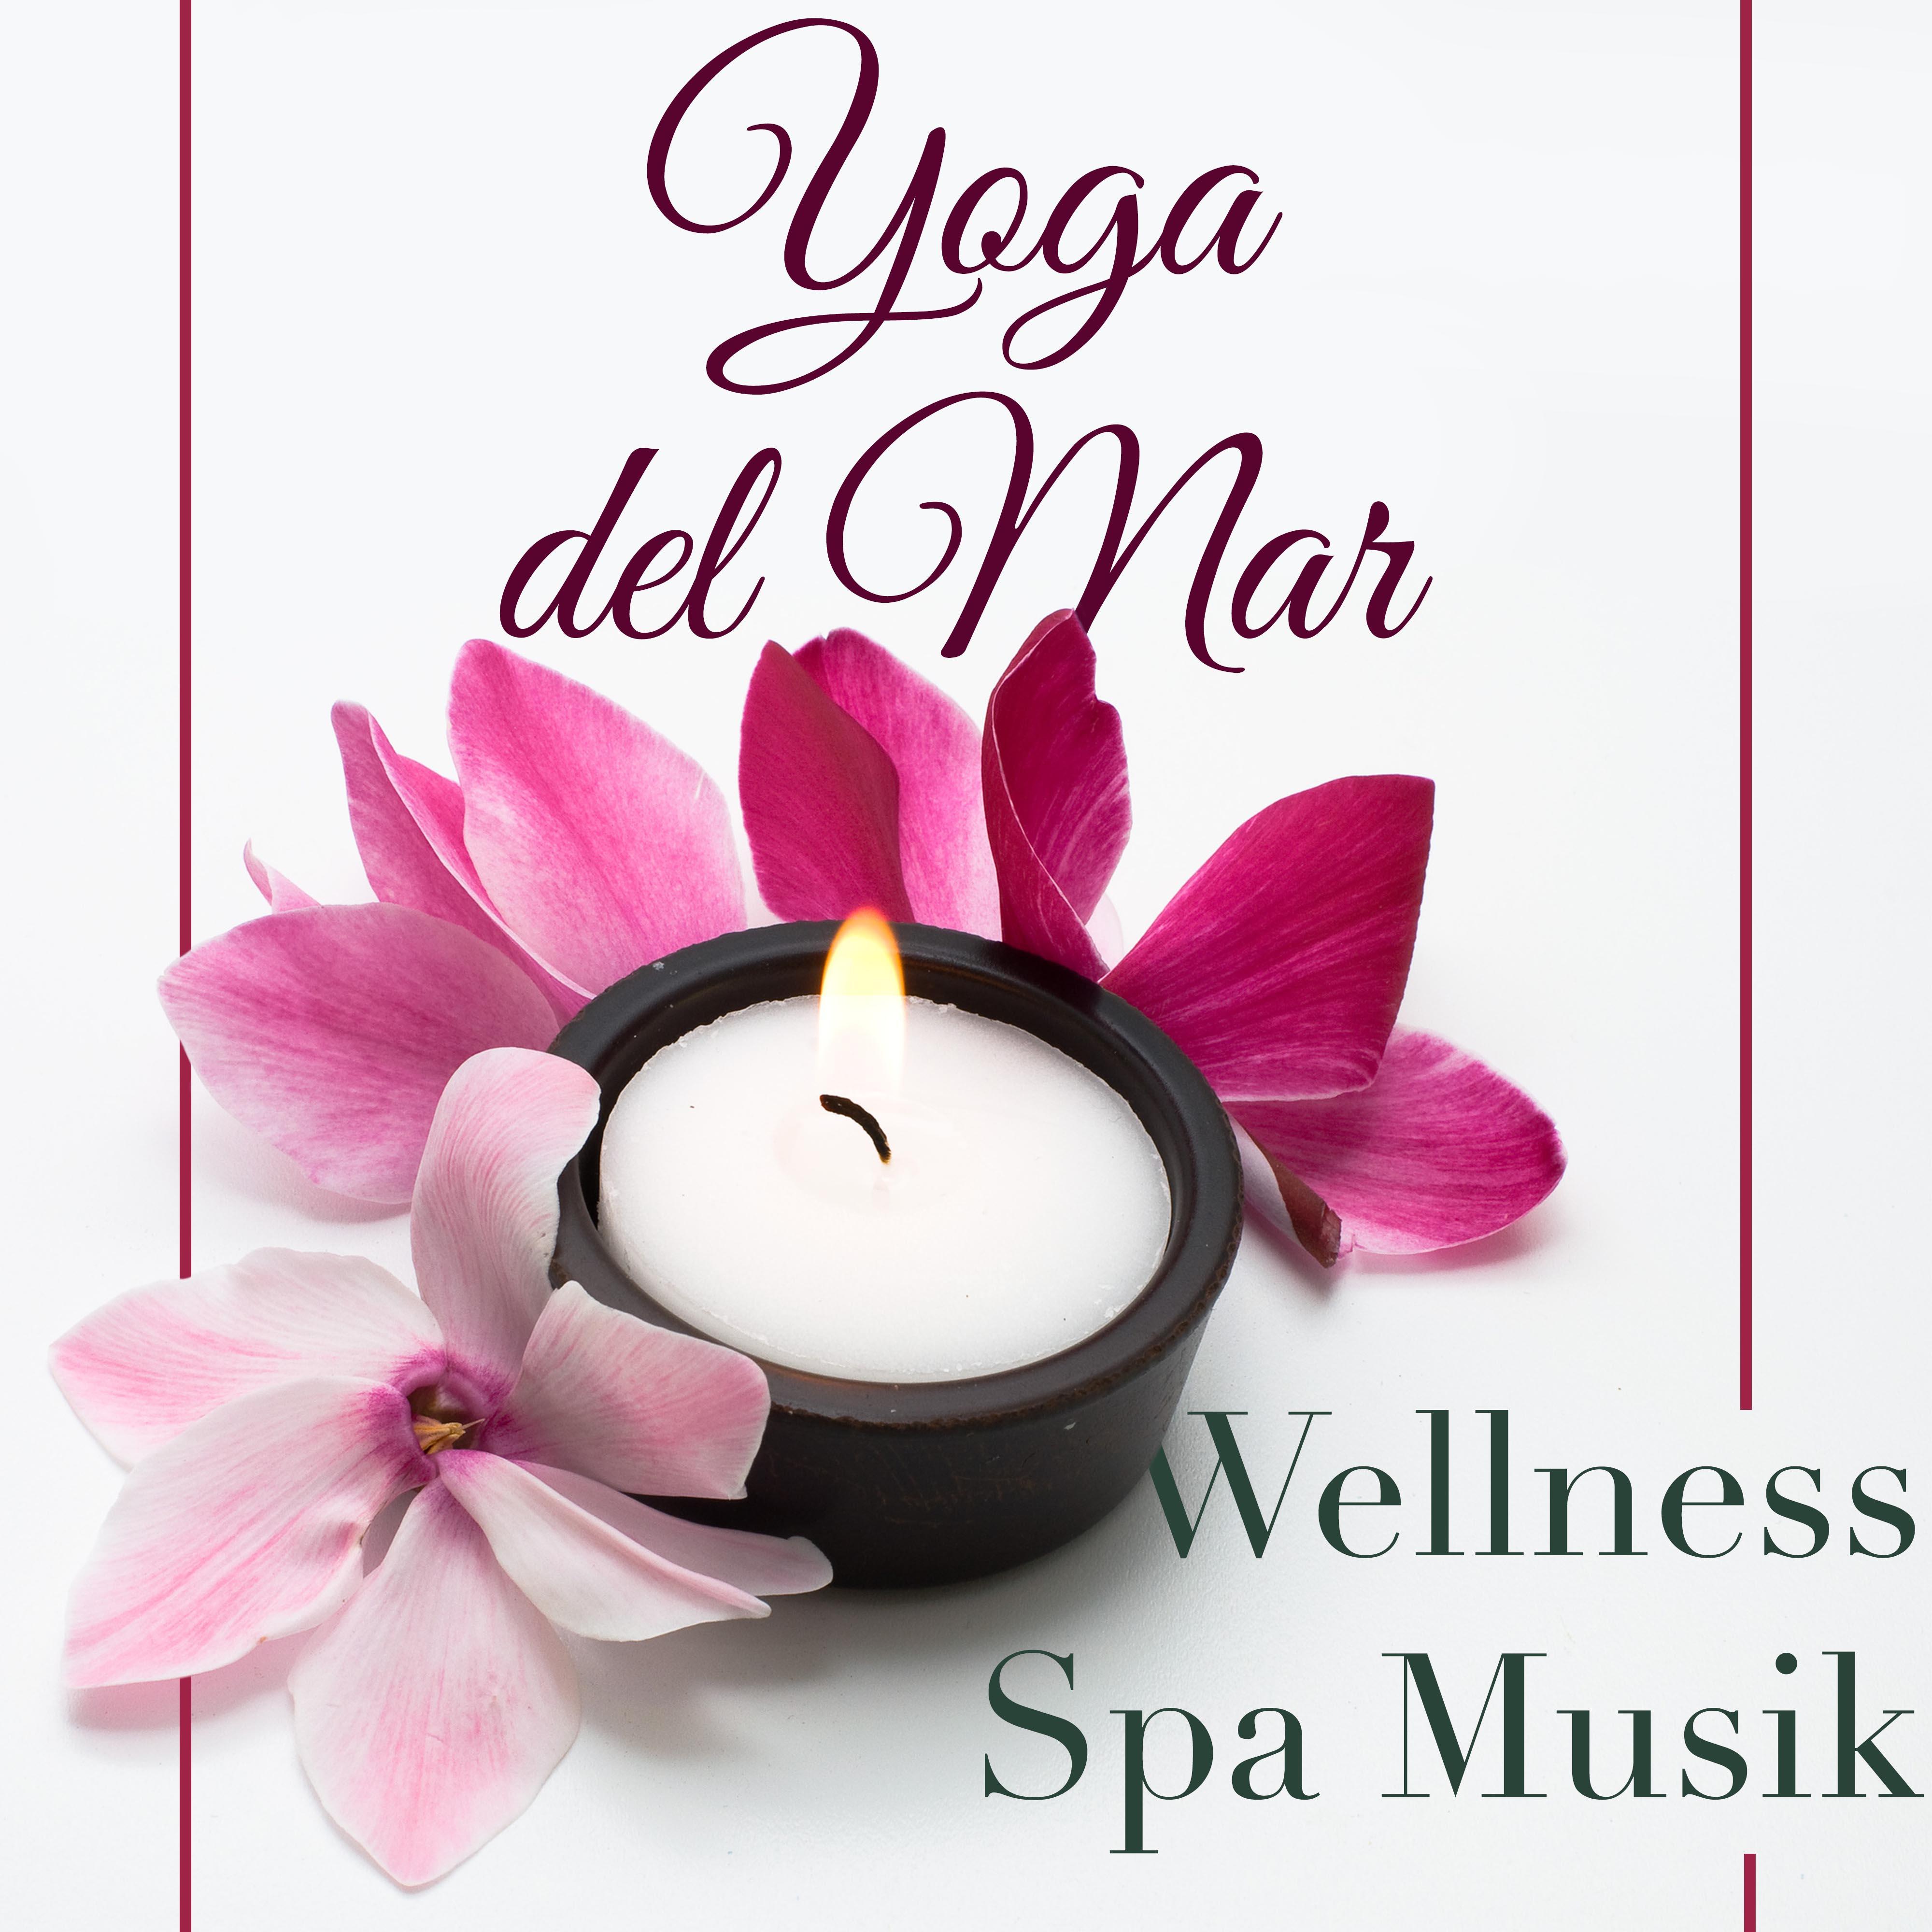 Yoga del Mar: Wellness Spa Musik Cafe  Naturger usche Entspannungsmusik Klangkulissen, Yoga Musik  Tiefenentspannung Atmospheres